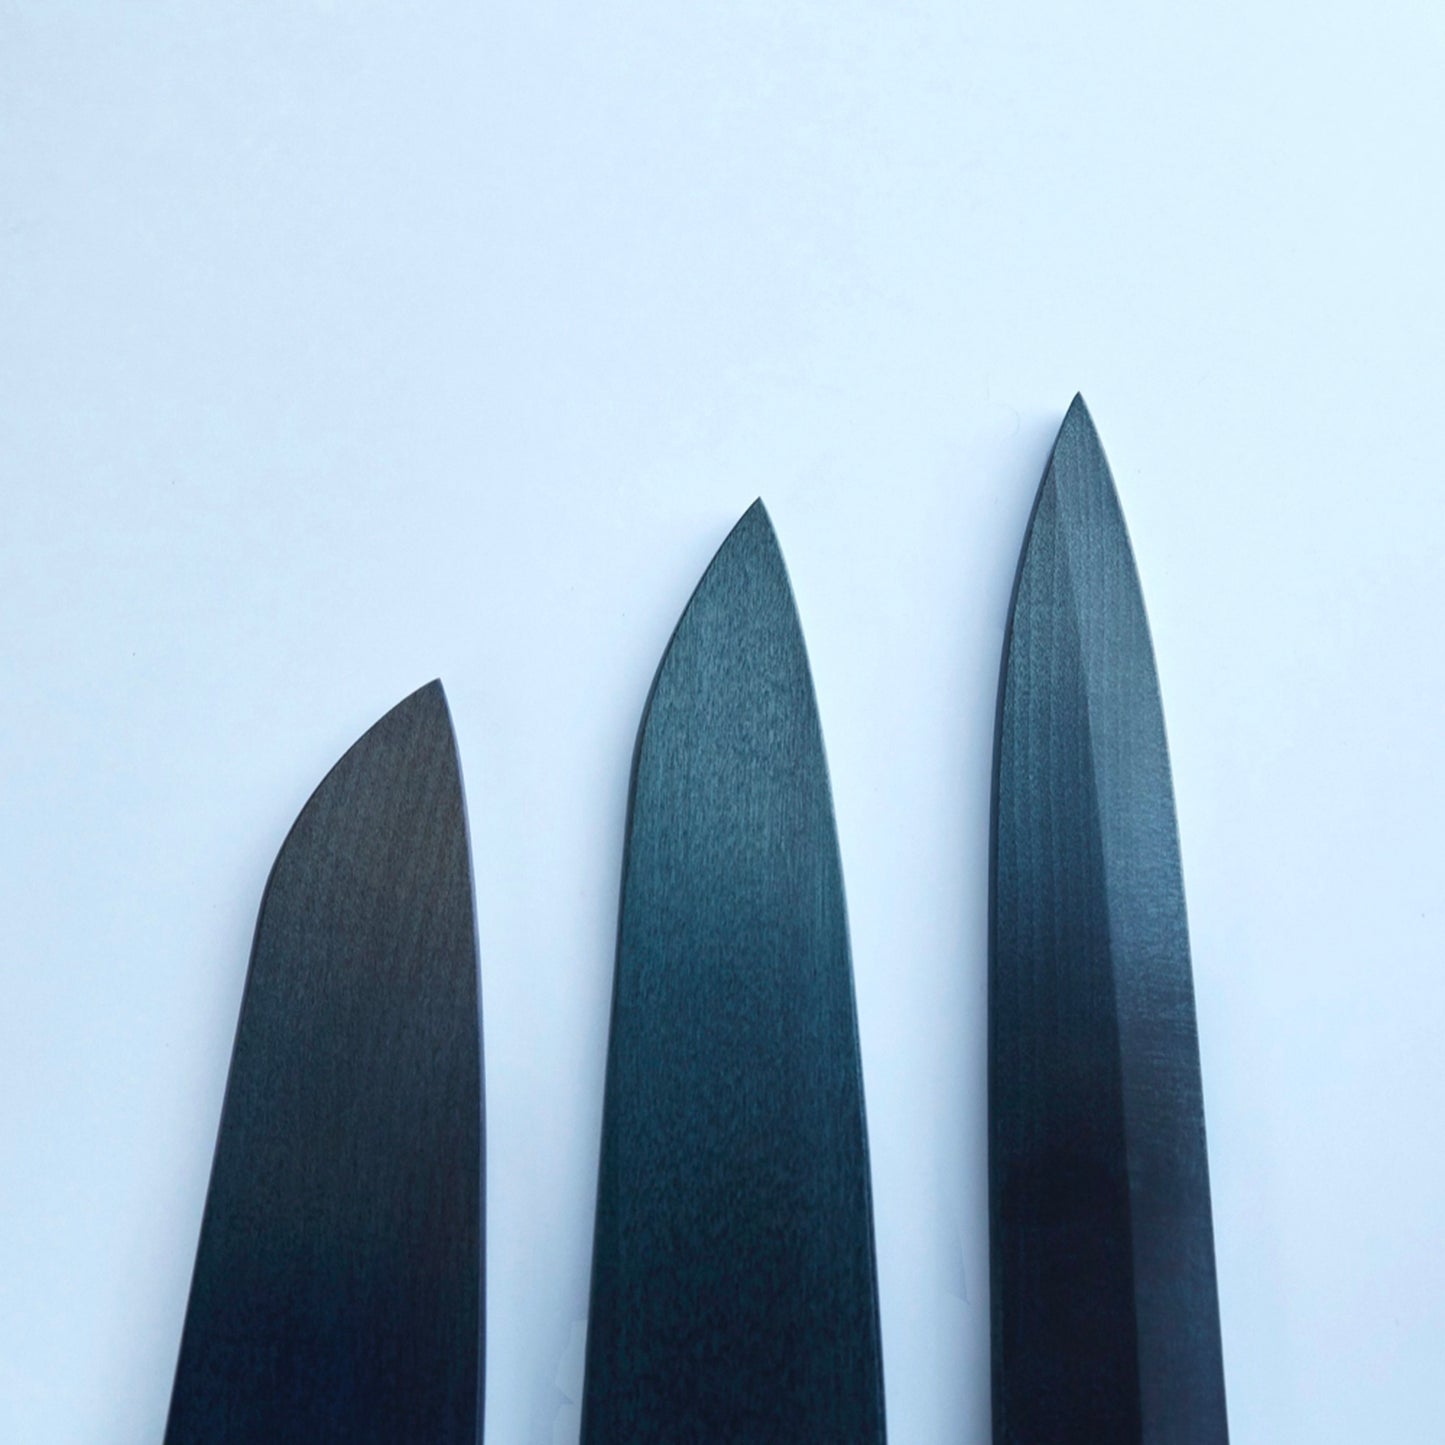 Single sale of sheaths (sheaths/knife cases)